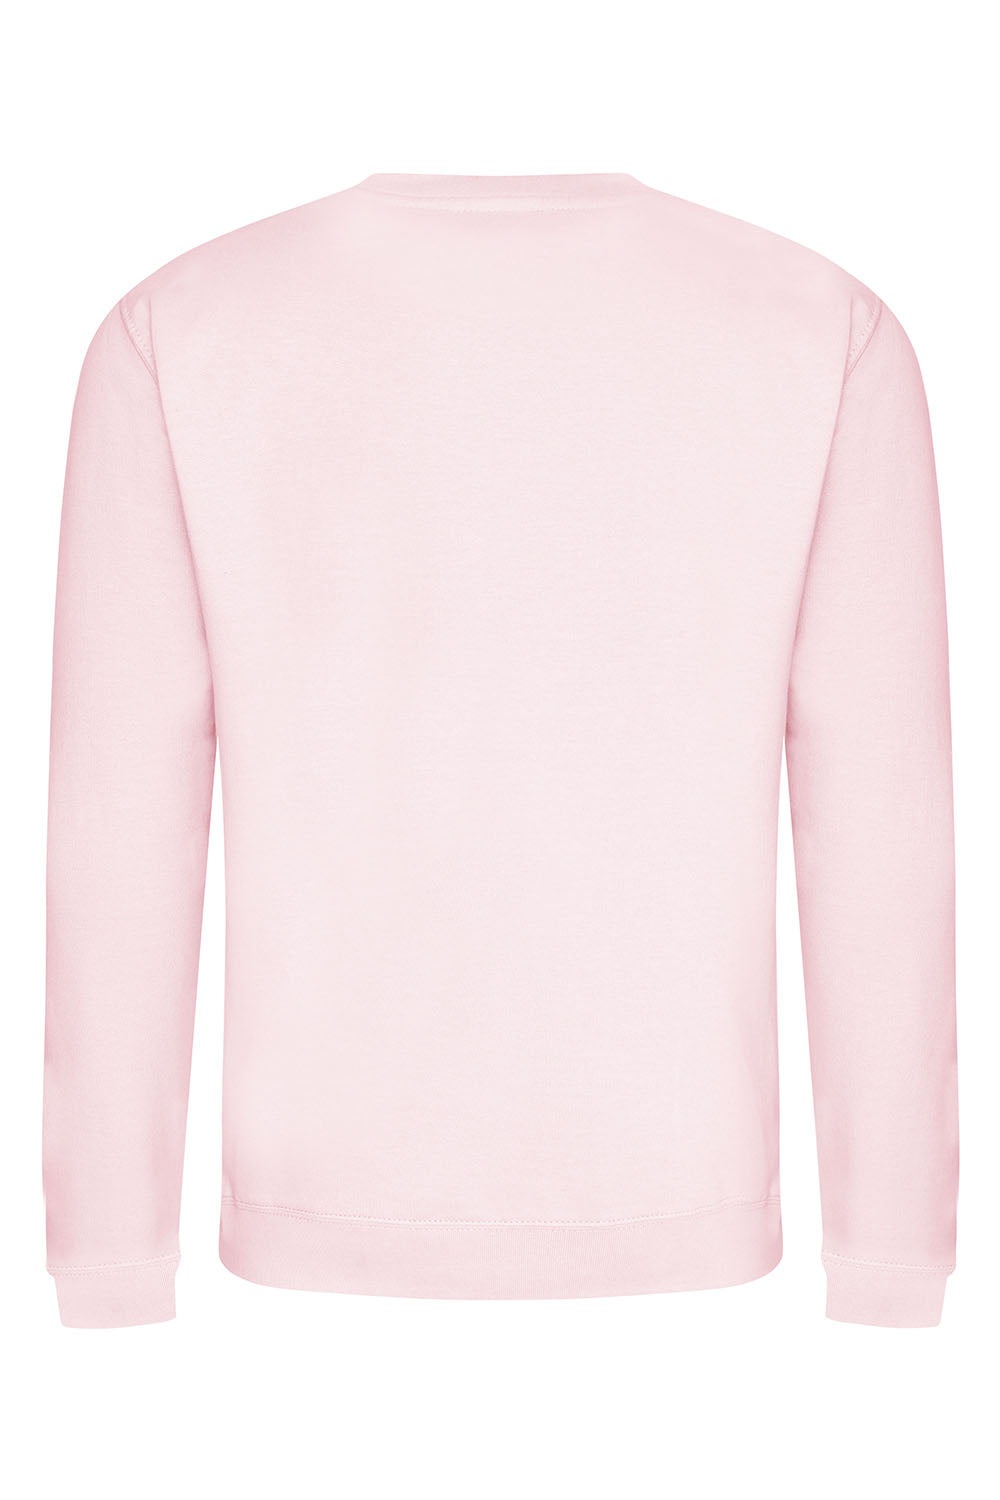 Let's Go Girls Sweatshirt In Baby Pink (Custom Pack)